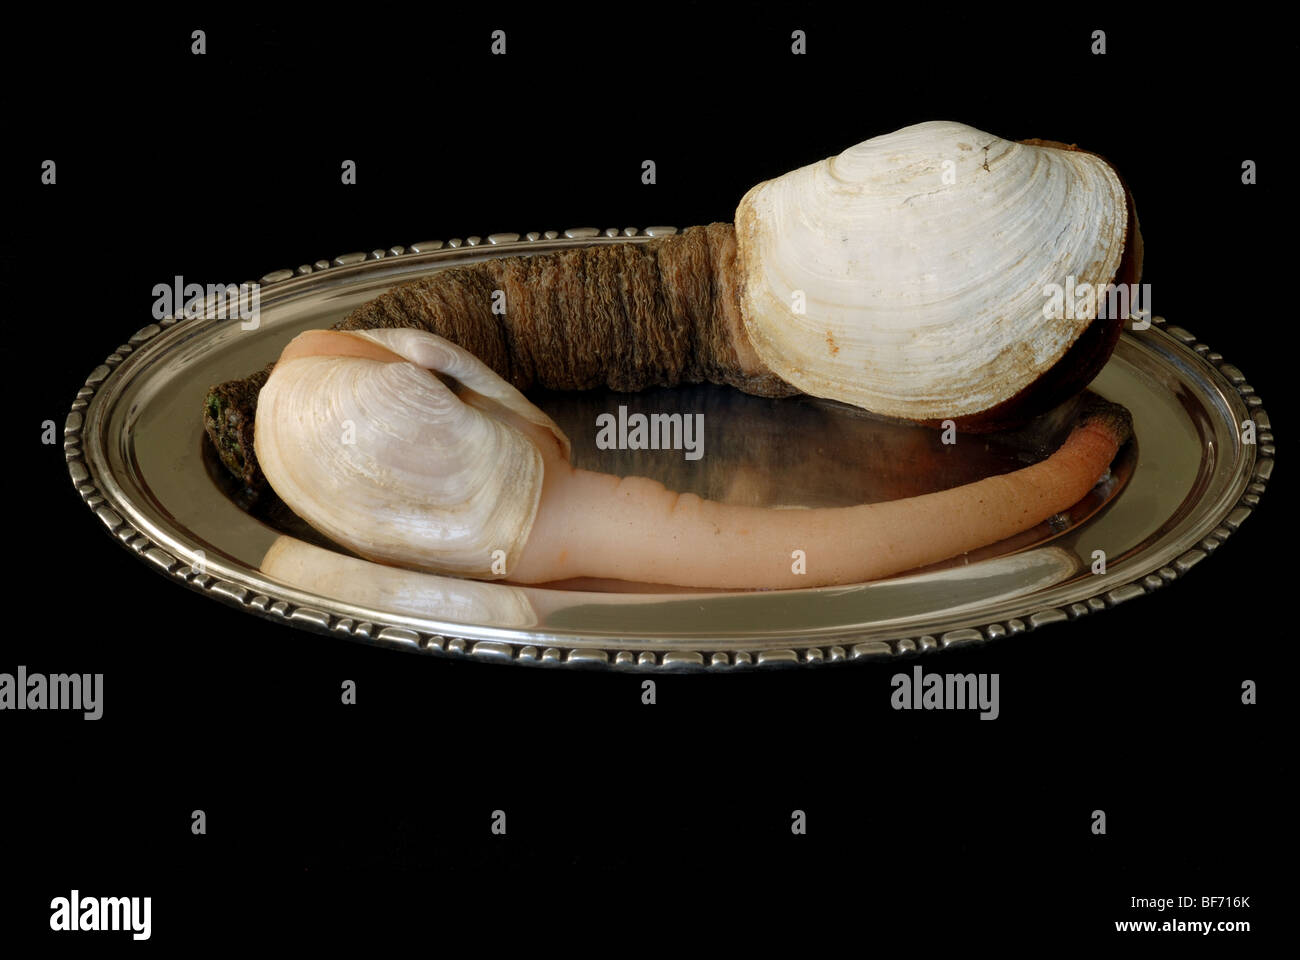 Geoduck, or Panopea abrupta, a species of very large saltwater clam, marine bivalve mollusk. Stock Photo